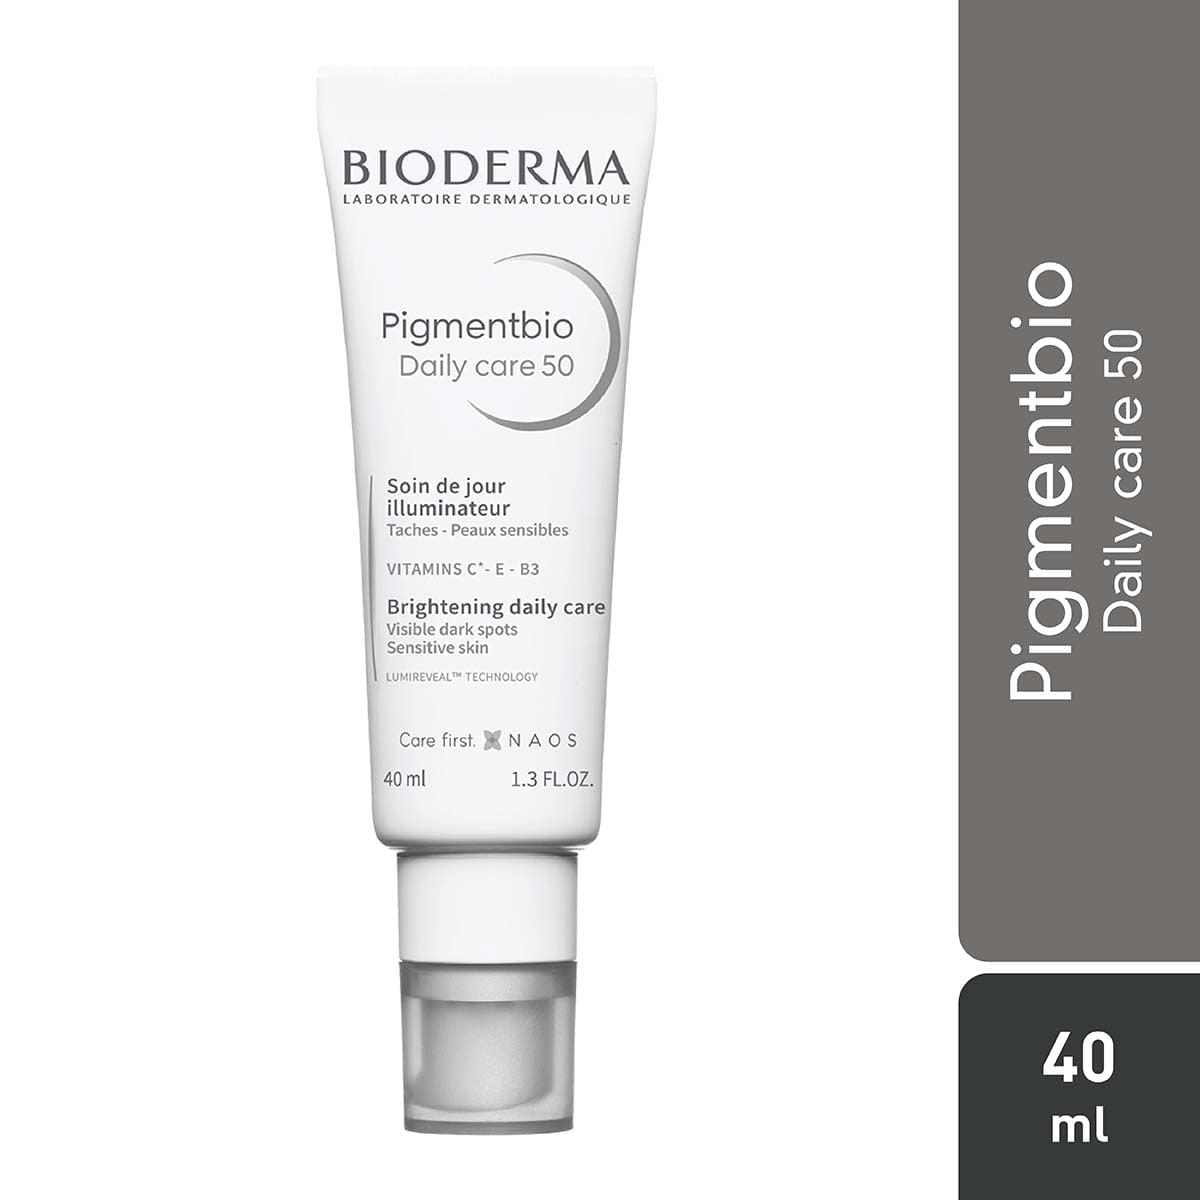 BIODERMA Pigmentbio Daily Care SPF 50 sunscreen for dark spot prevention and brightening skin care.